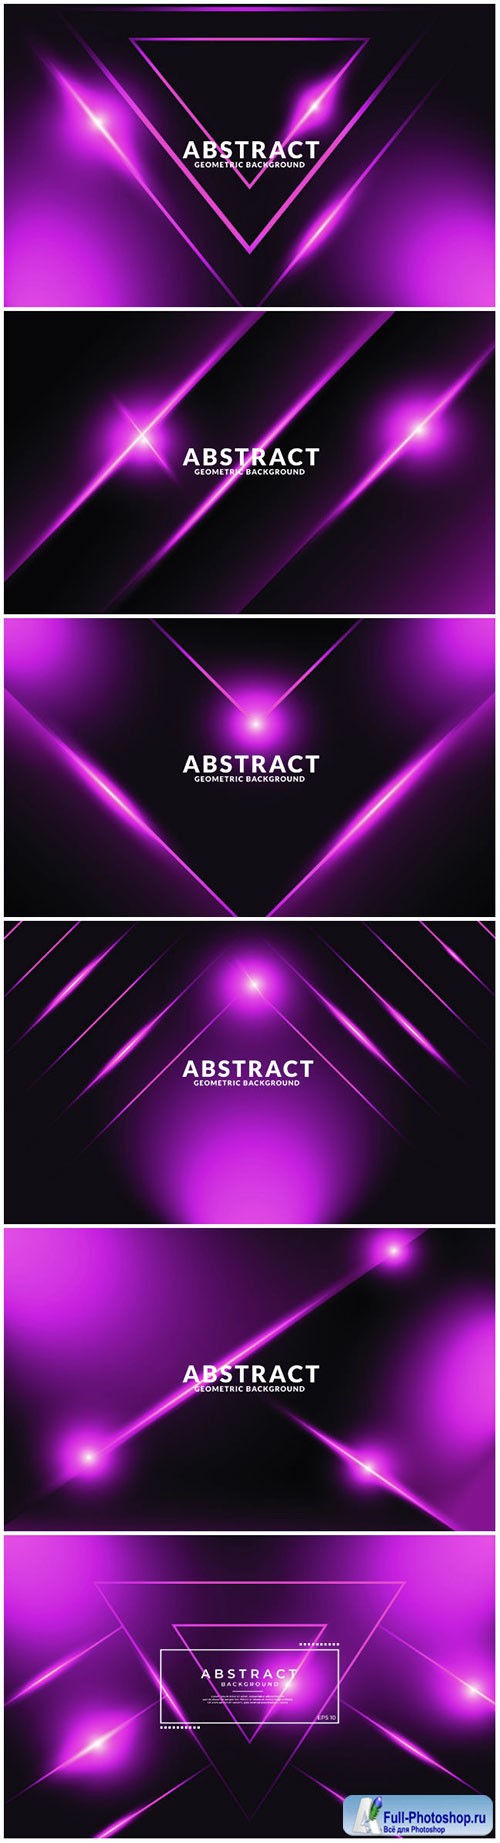 Dark purple realistic abstract geometric background, neon light effect 